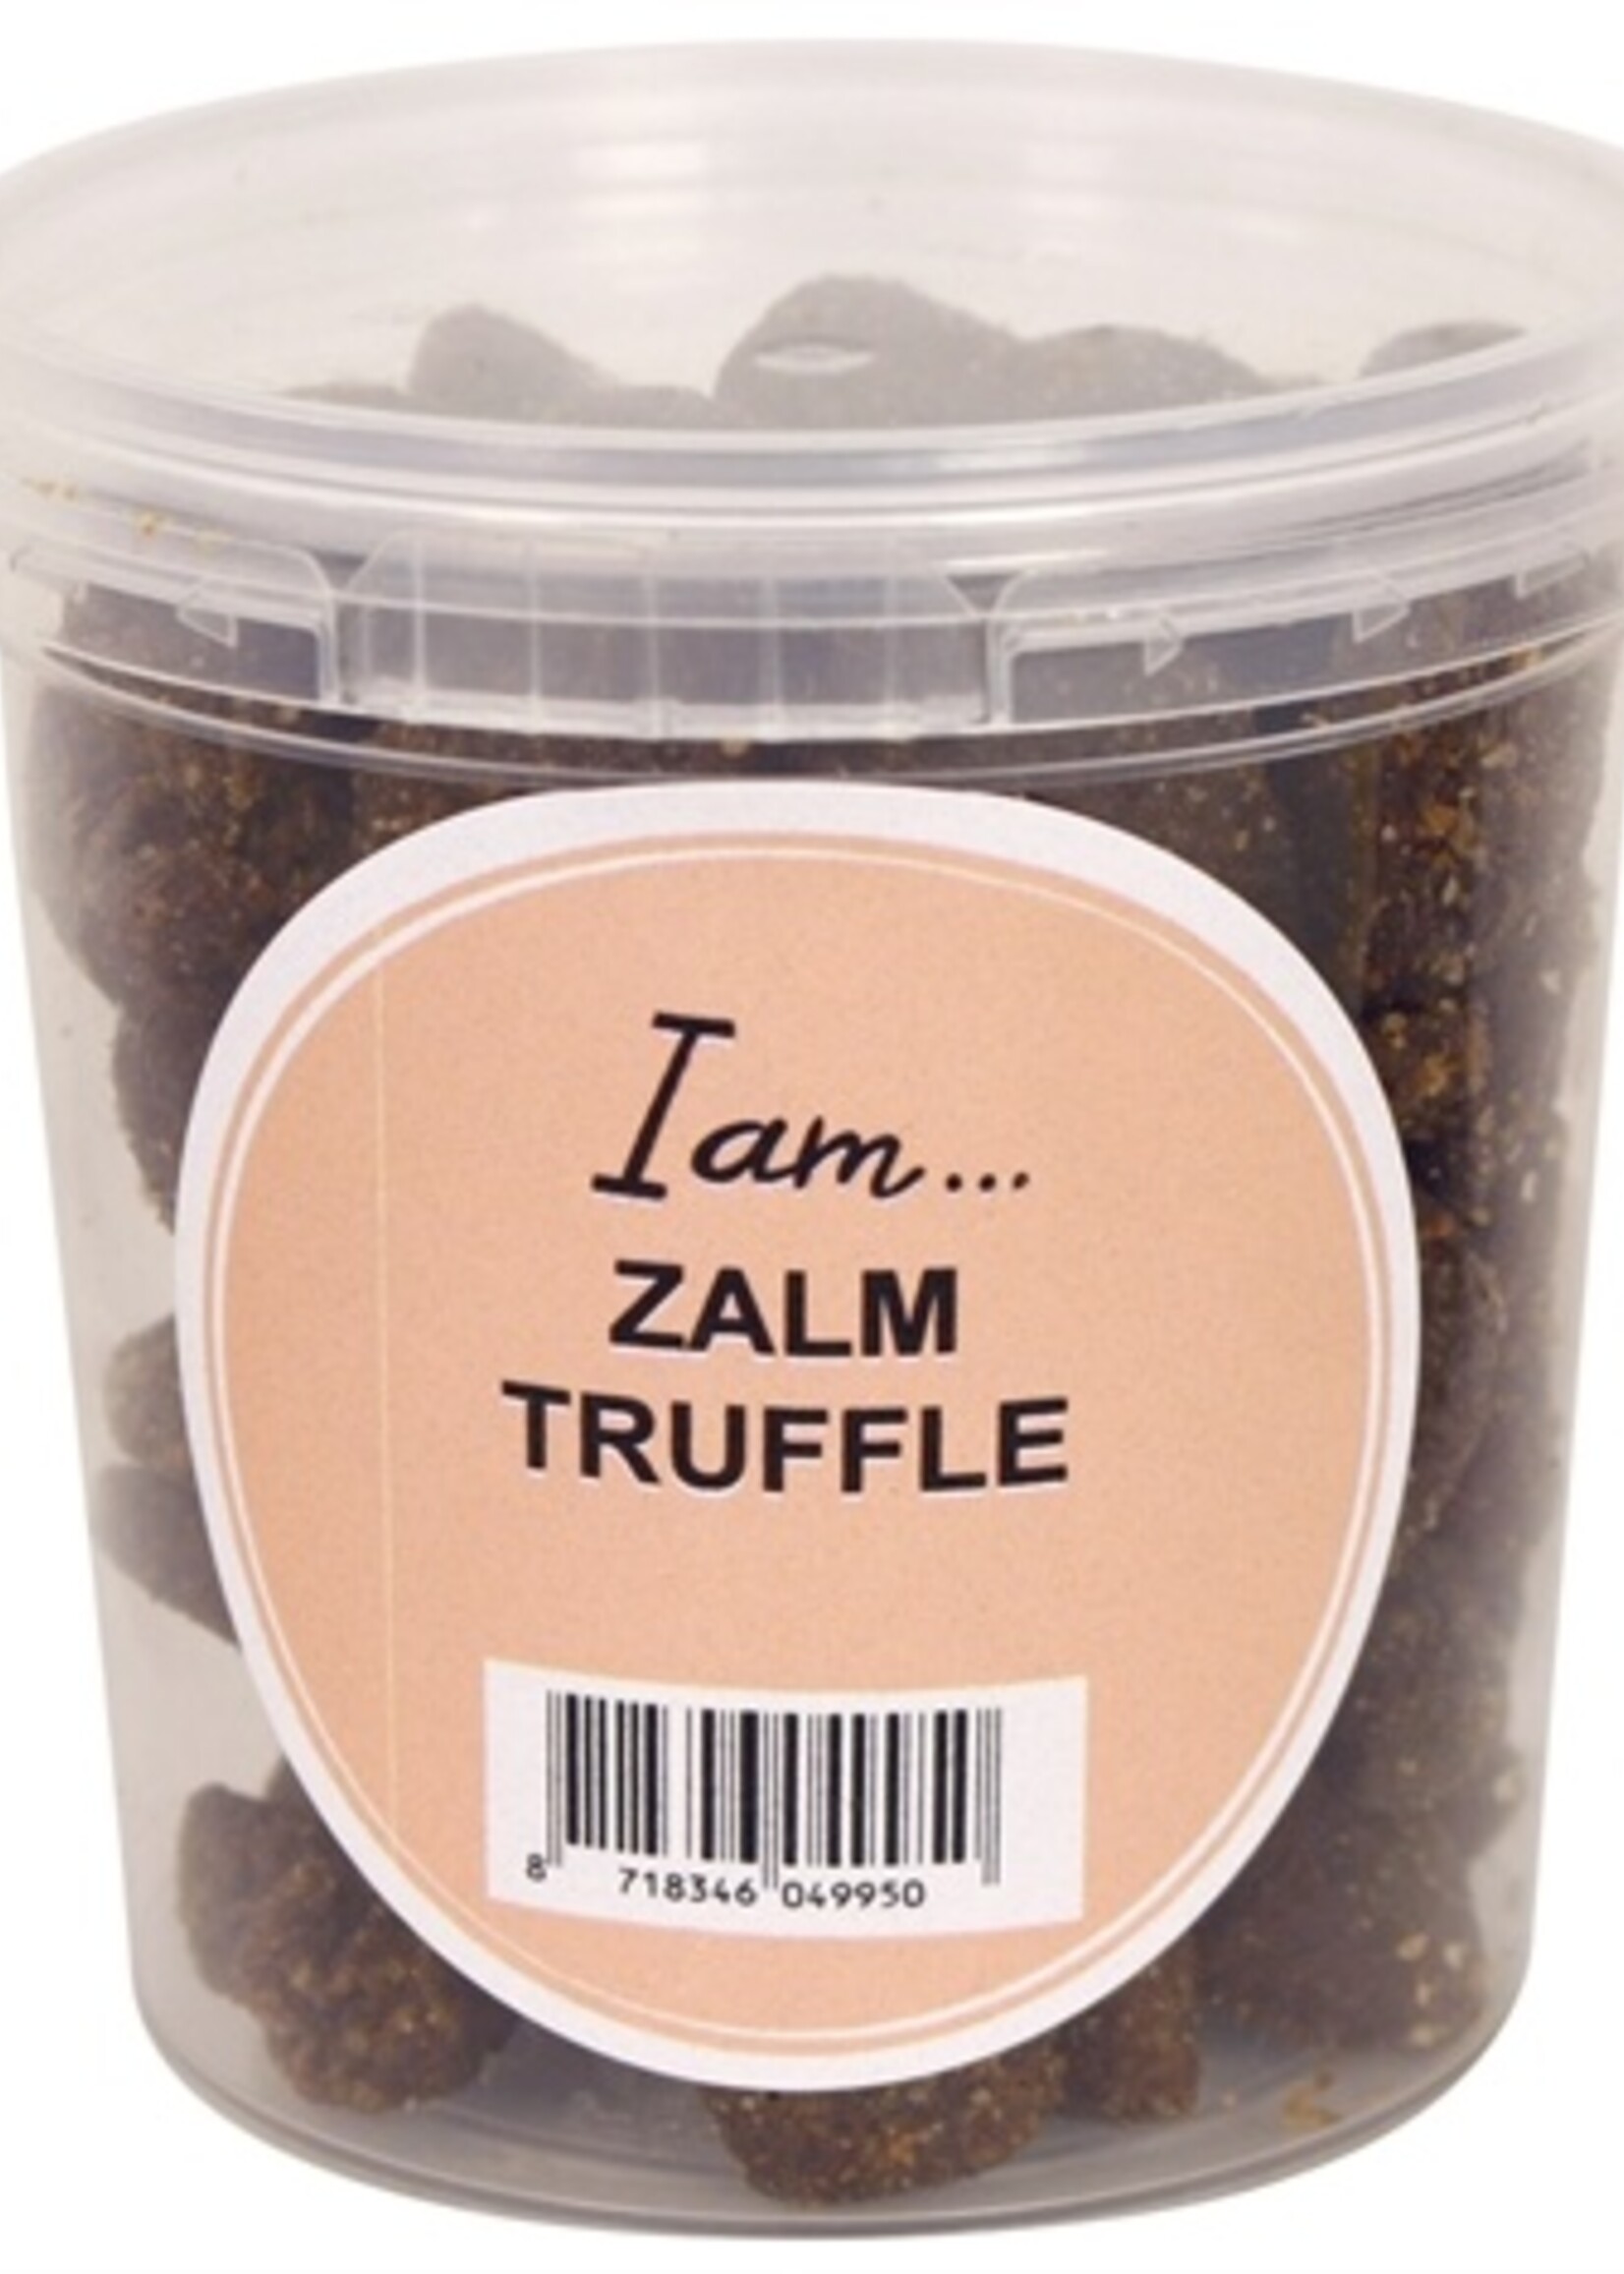 I am I am zalm truffle